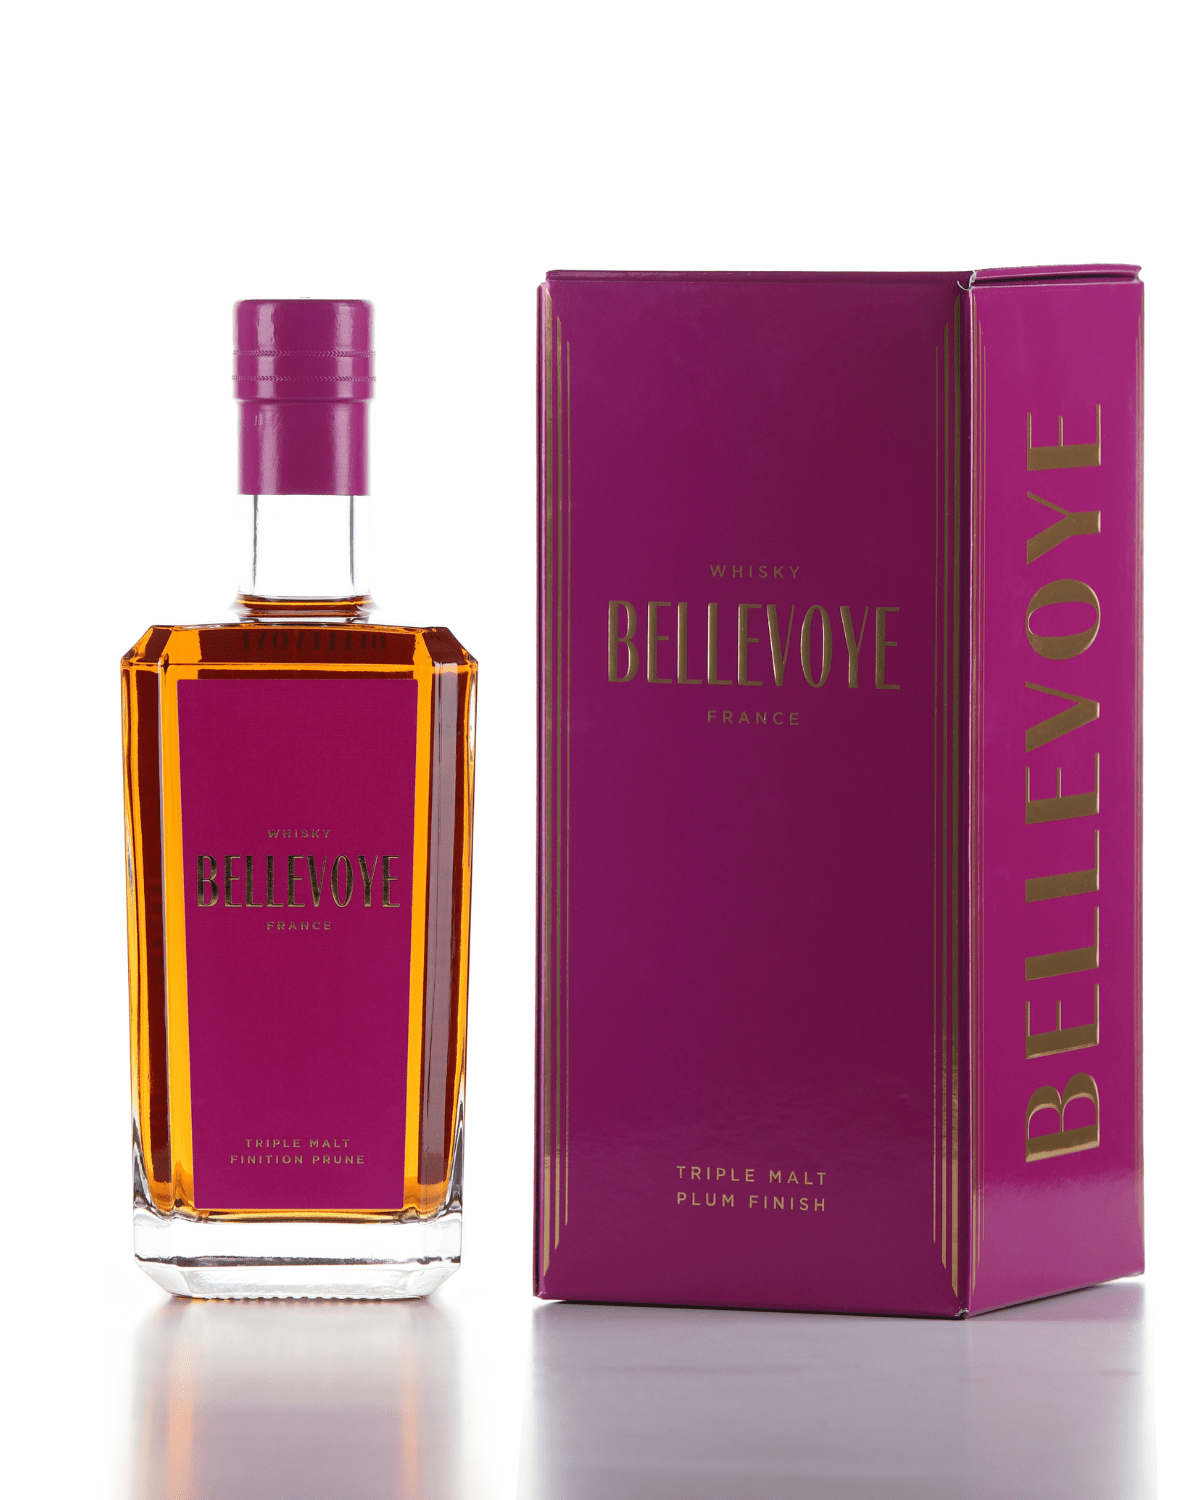 BELLEVOYE Prune, Whisky Français